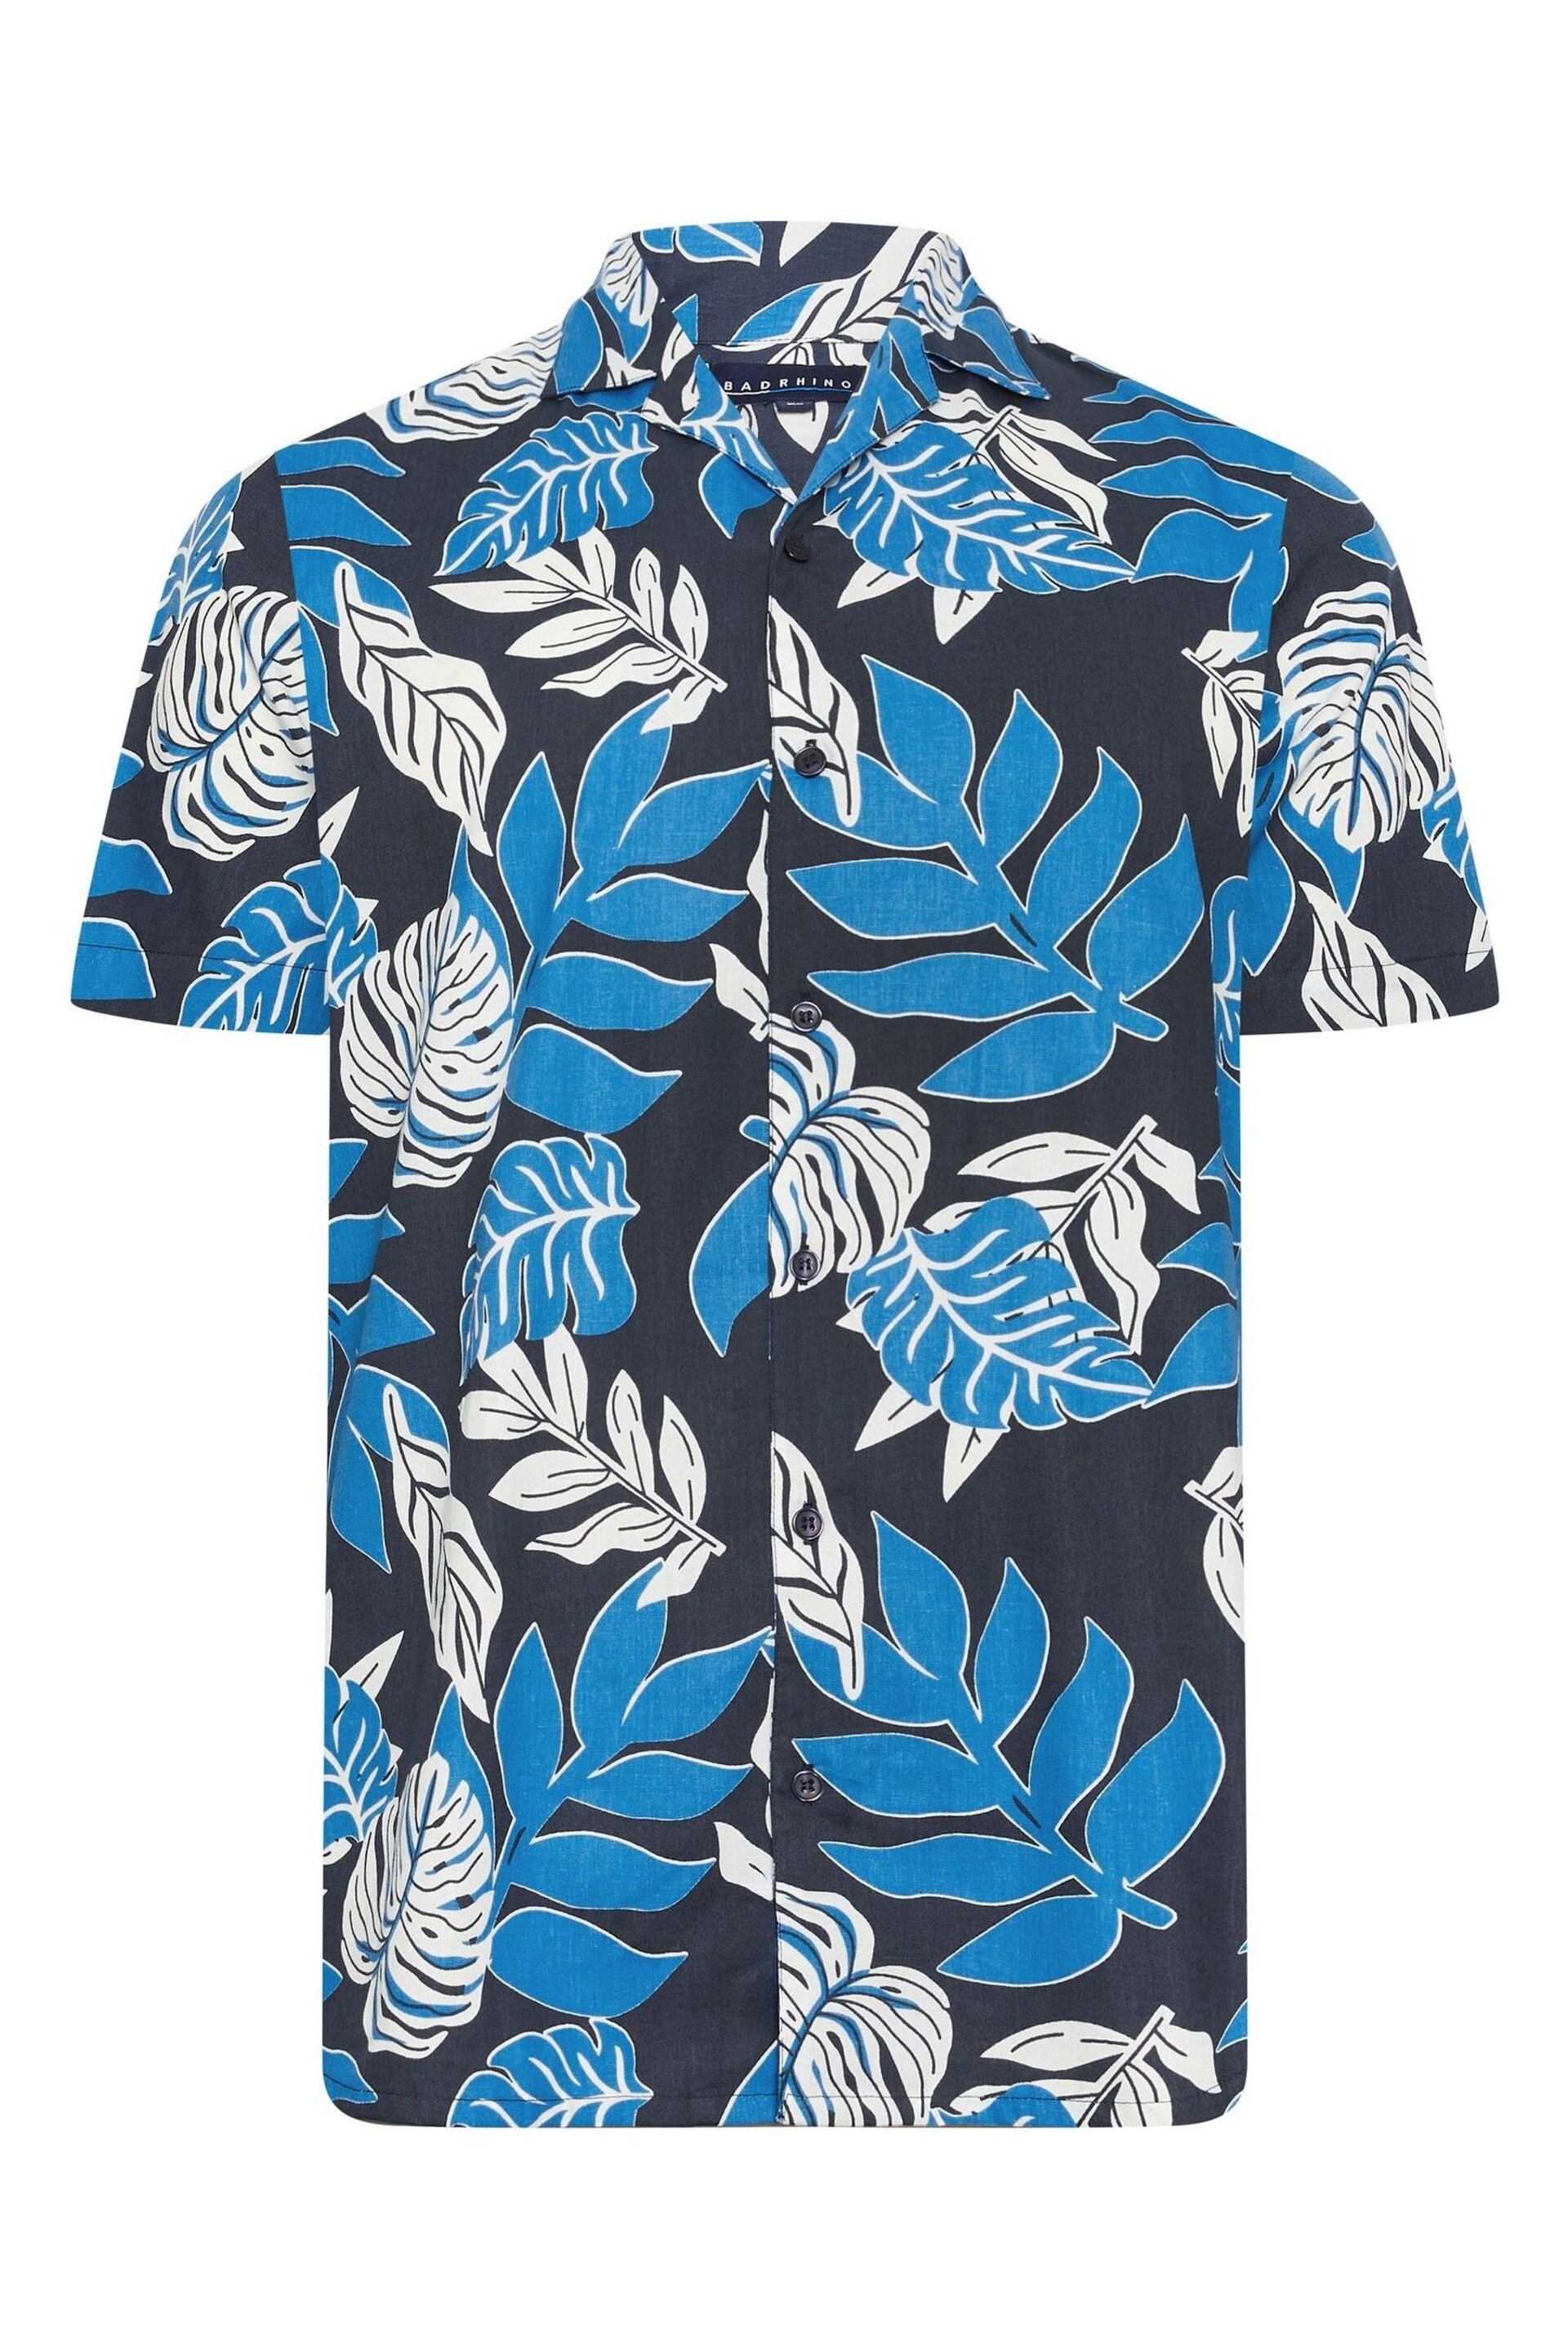 BadRhino Big & Tall Navy Blue Leaf Print Shirt - Image 2 of 3